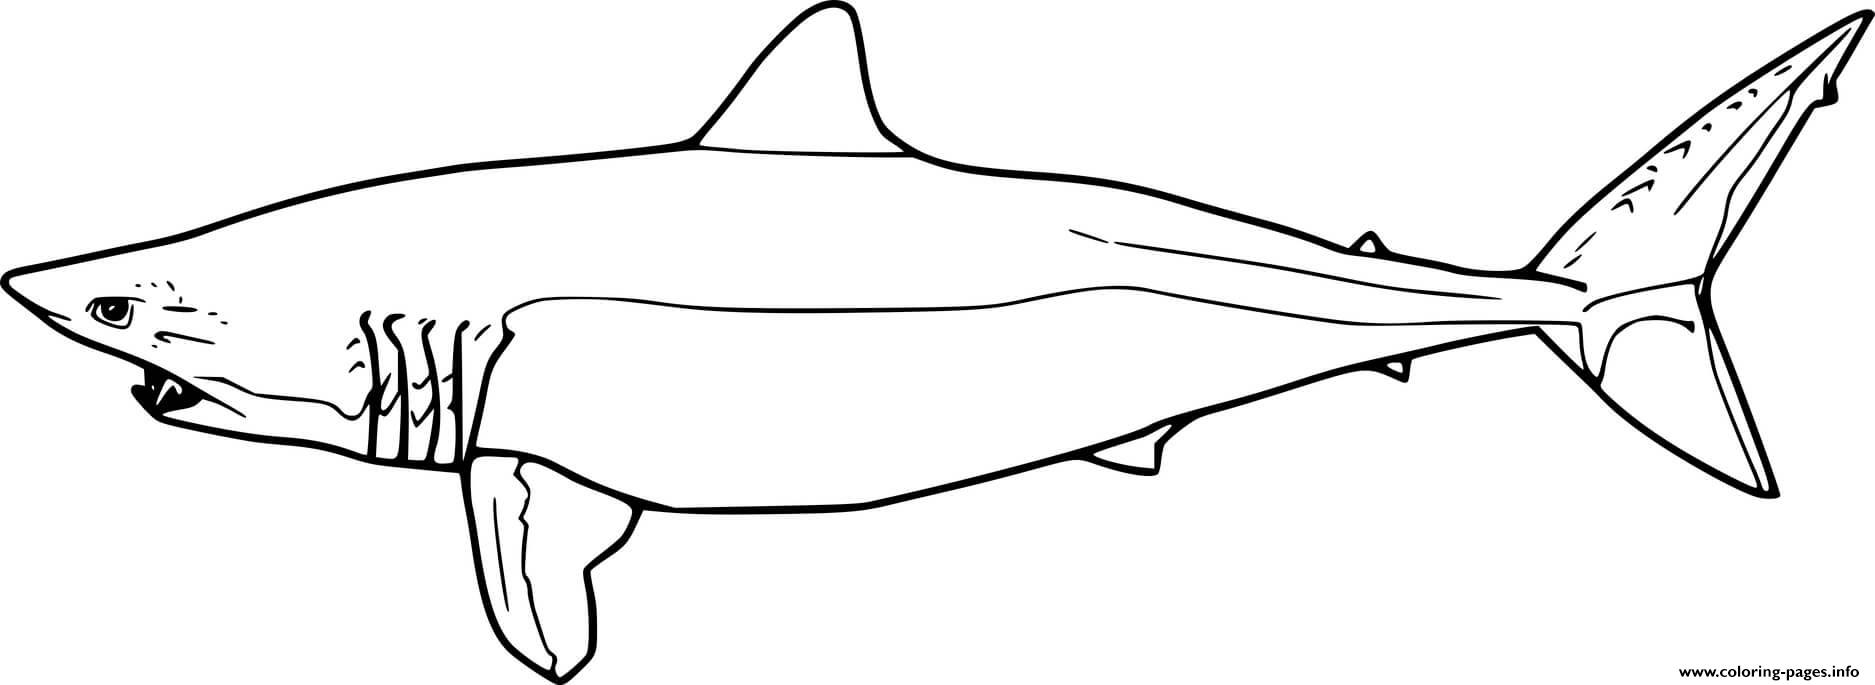 Shortfin mako shark coloring page printable